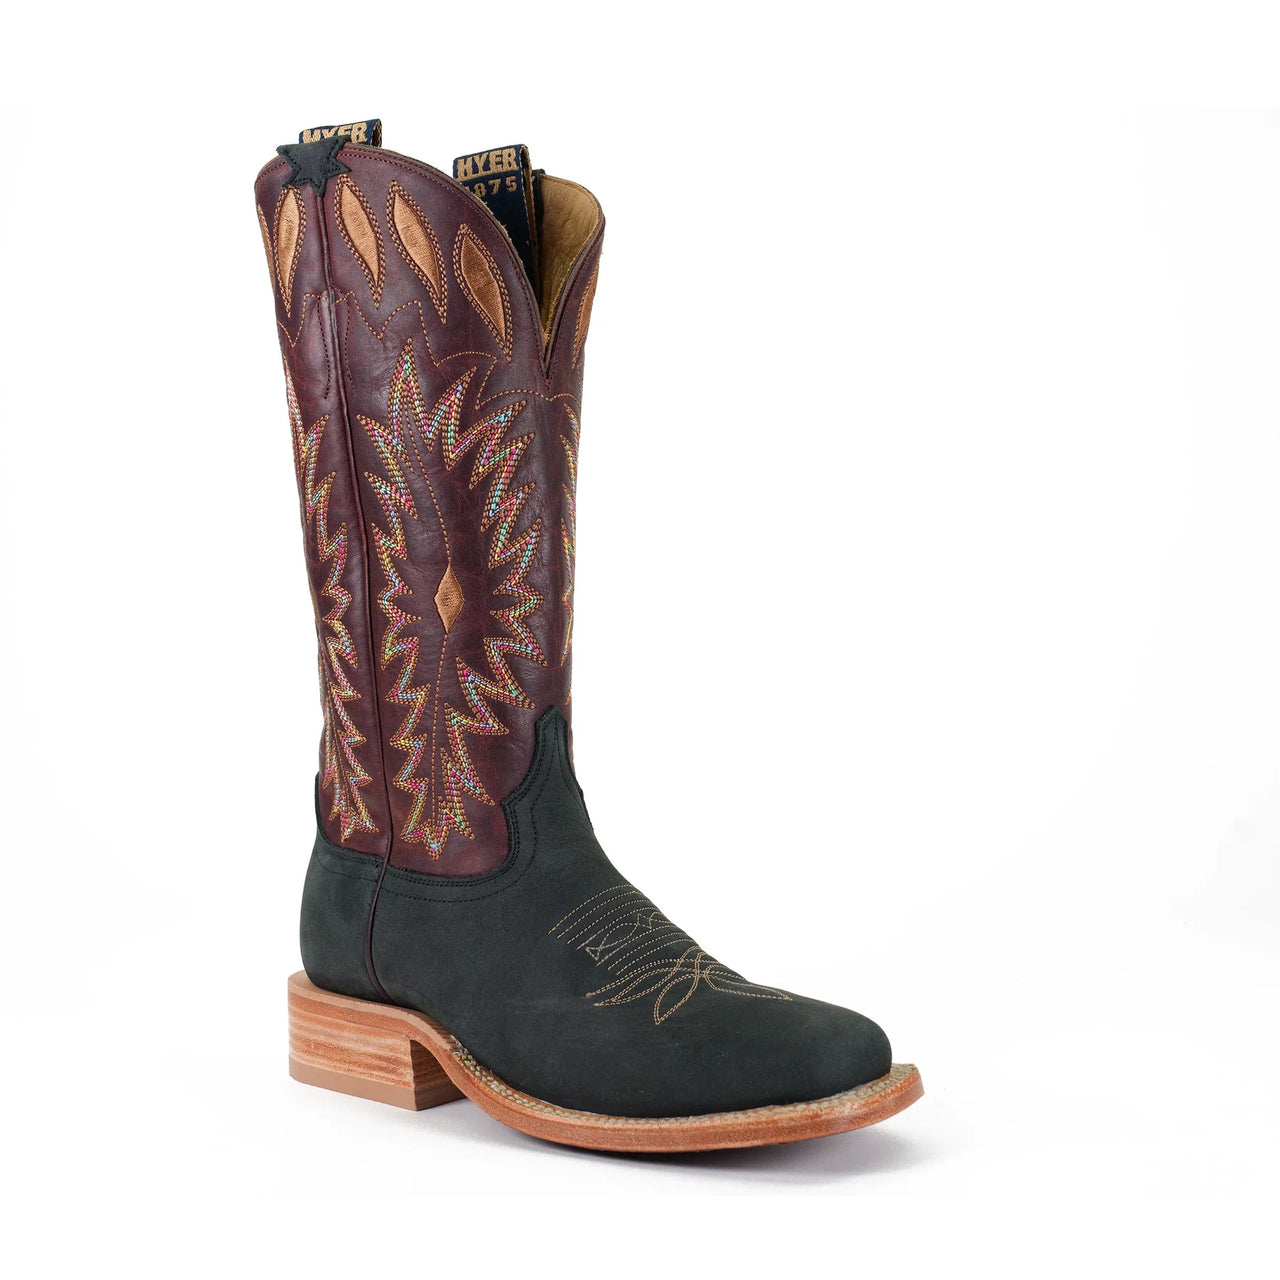 Hyer Women's Cherryvale Western Boots - Black Mule Cowhide